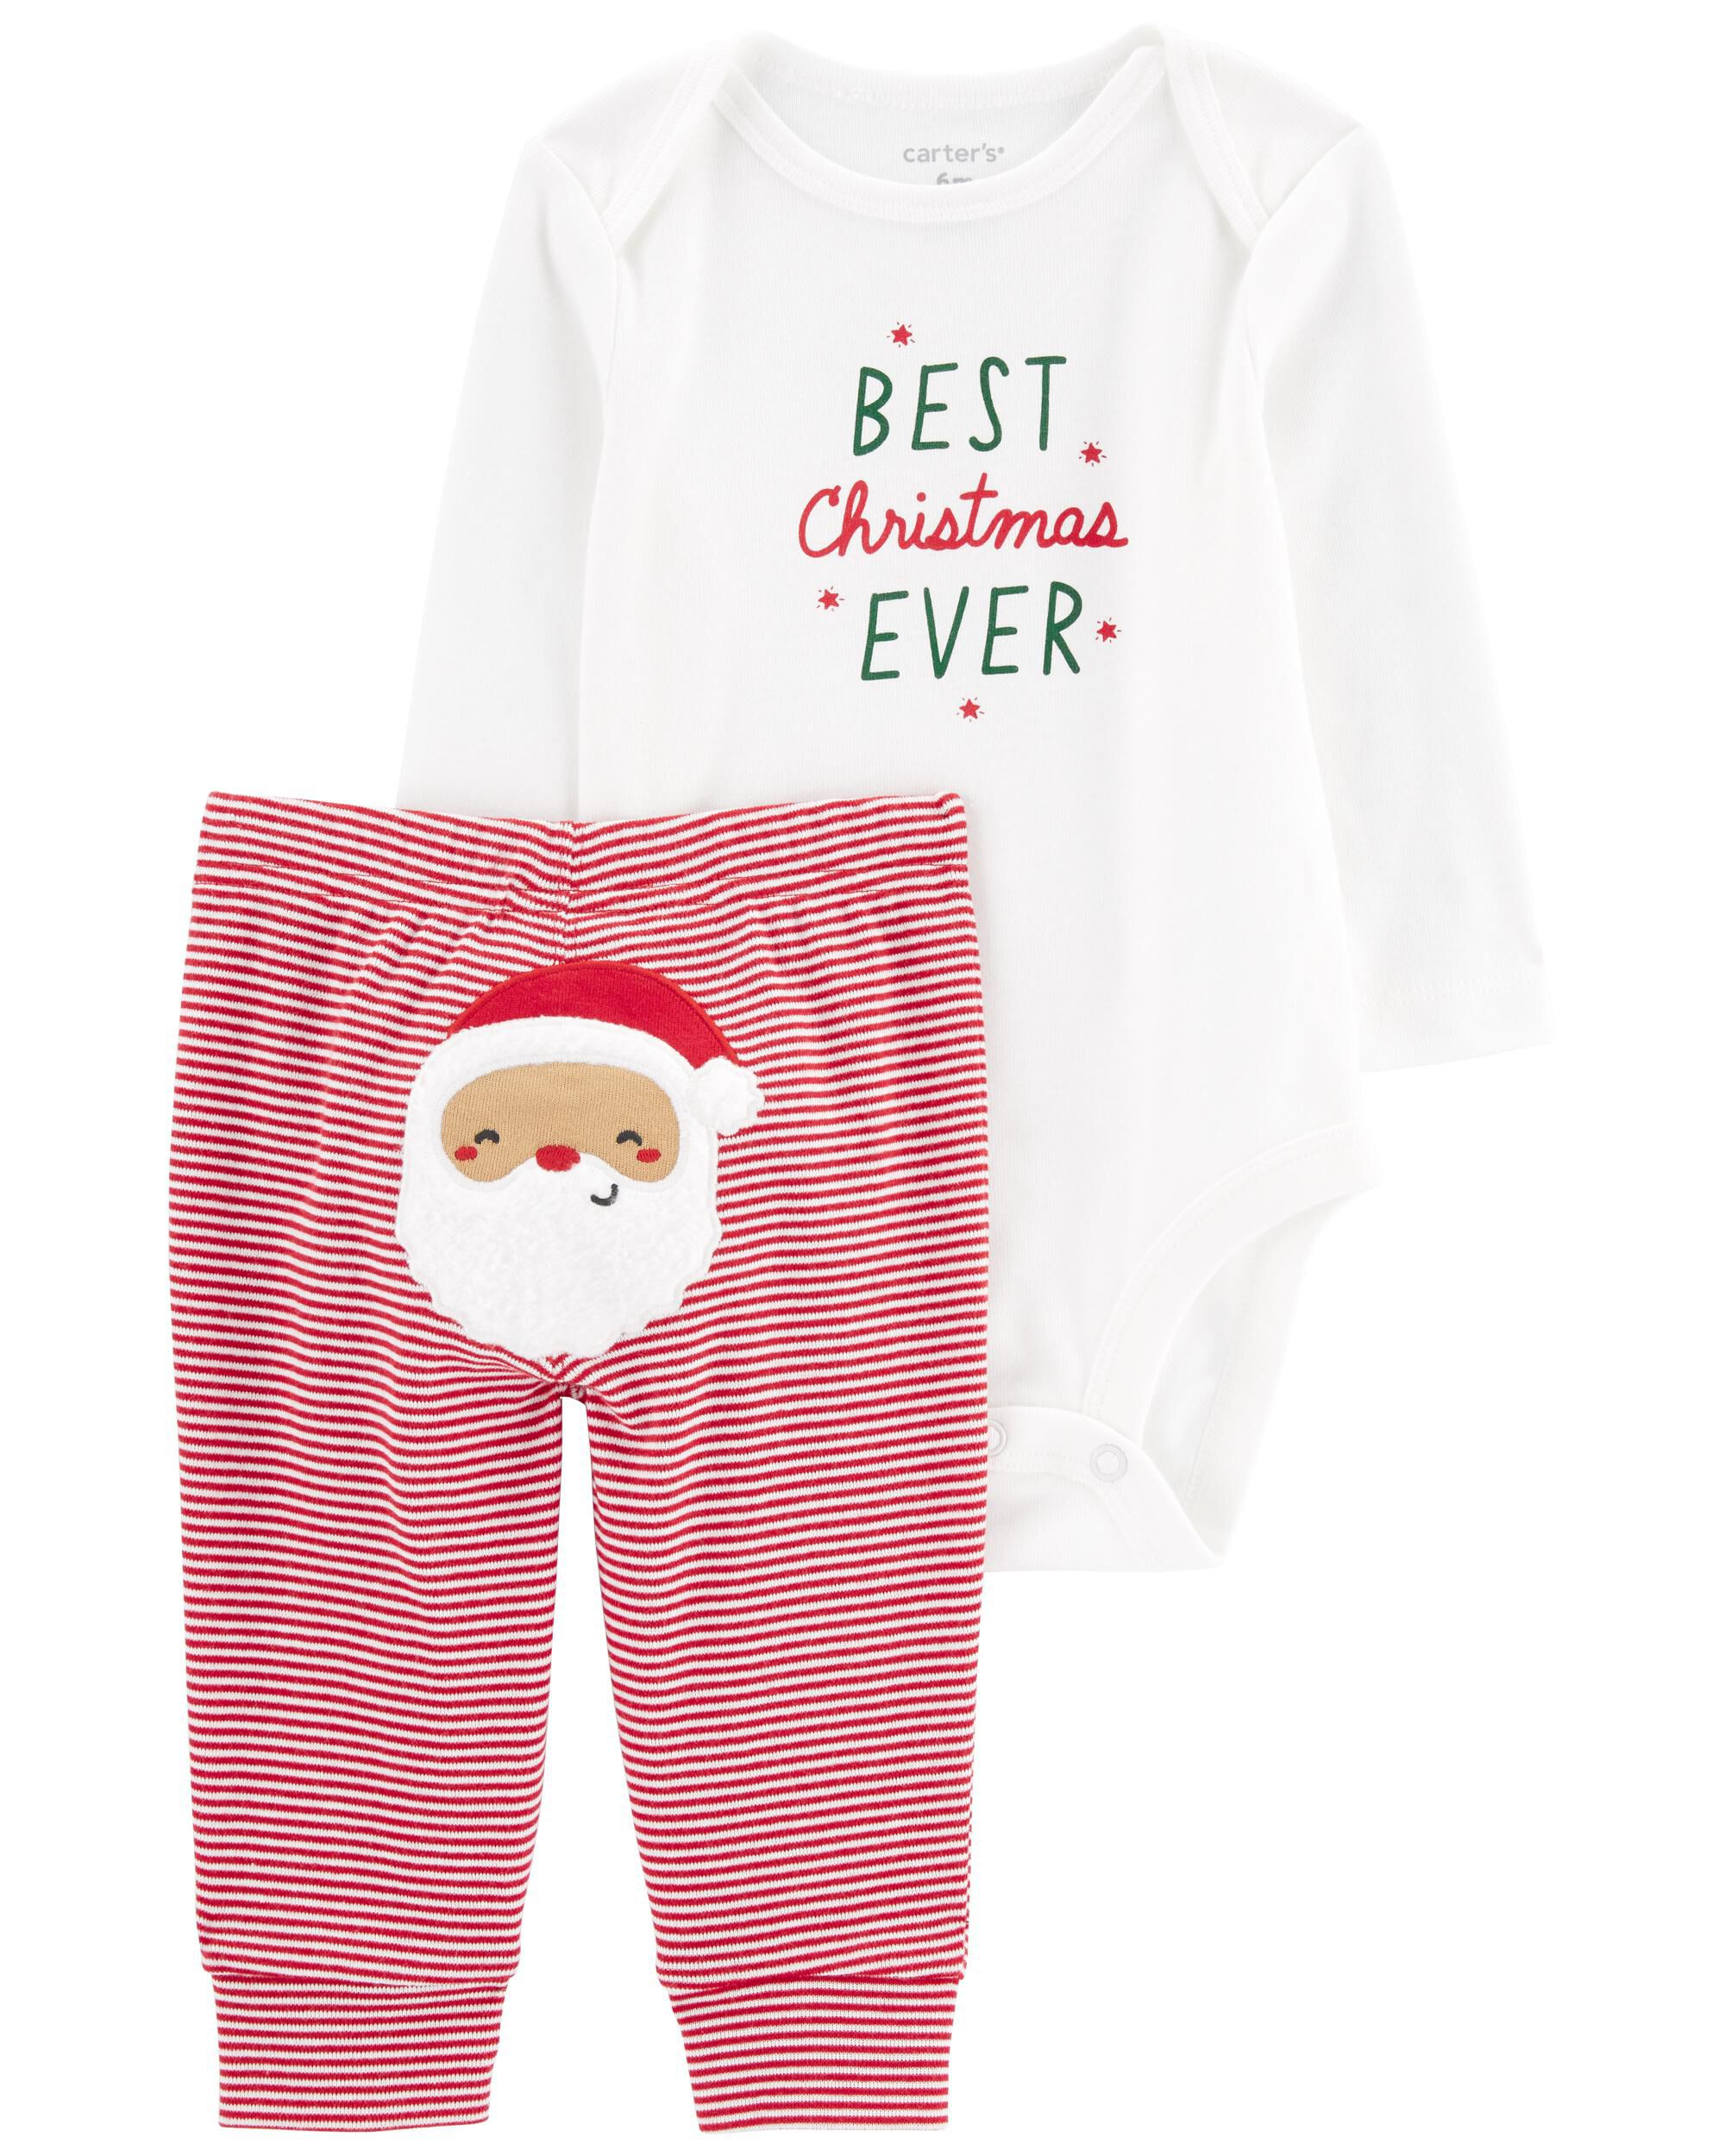 NEW Carters Baby Toddler Santa Pajamas Sizes 12M thru 3T Pants Christmas Costume 